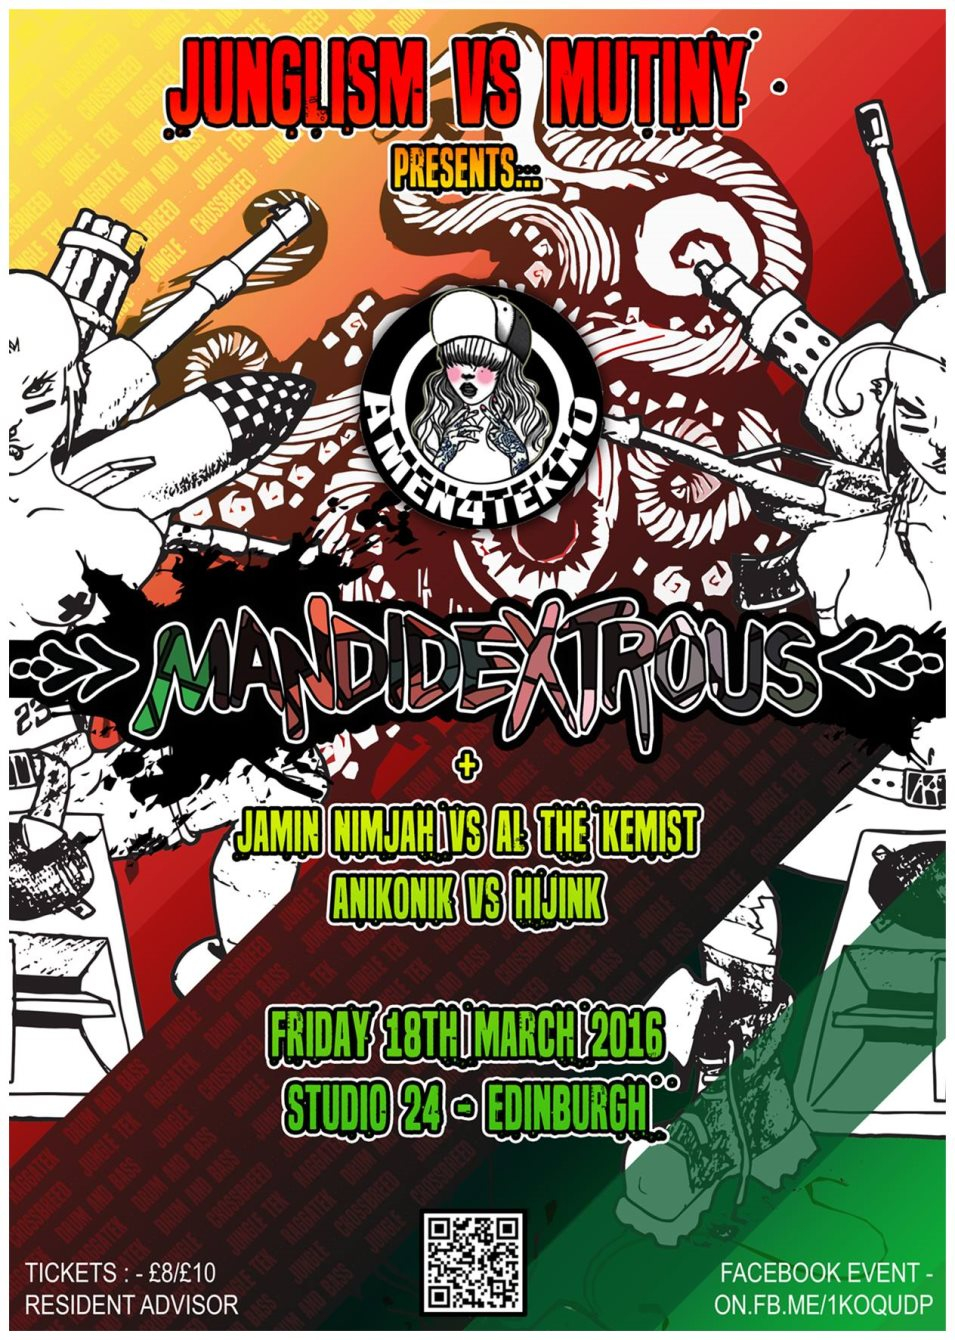 Junglism vs Mutiny presents Mandidextrous - Flyer front